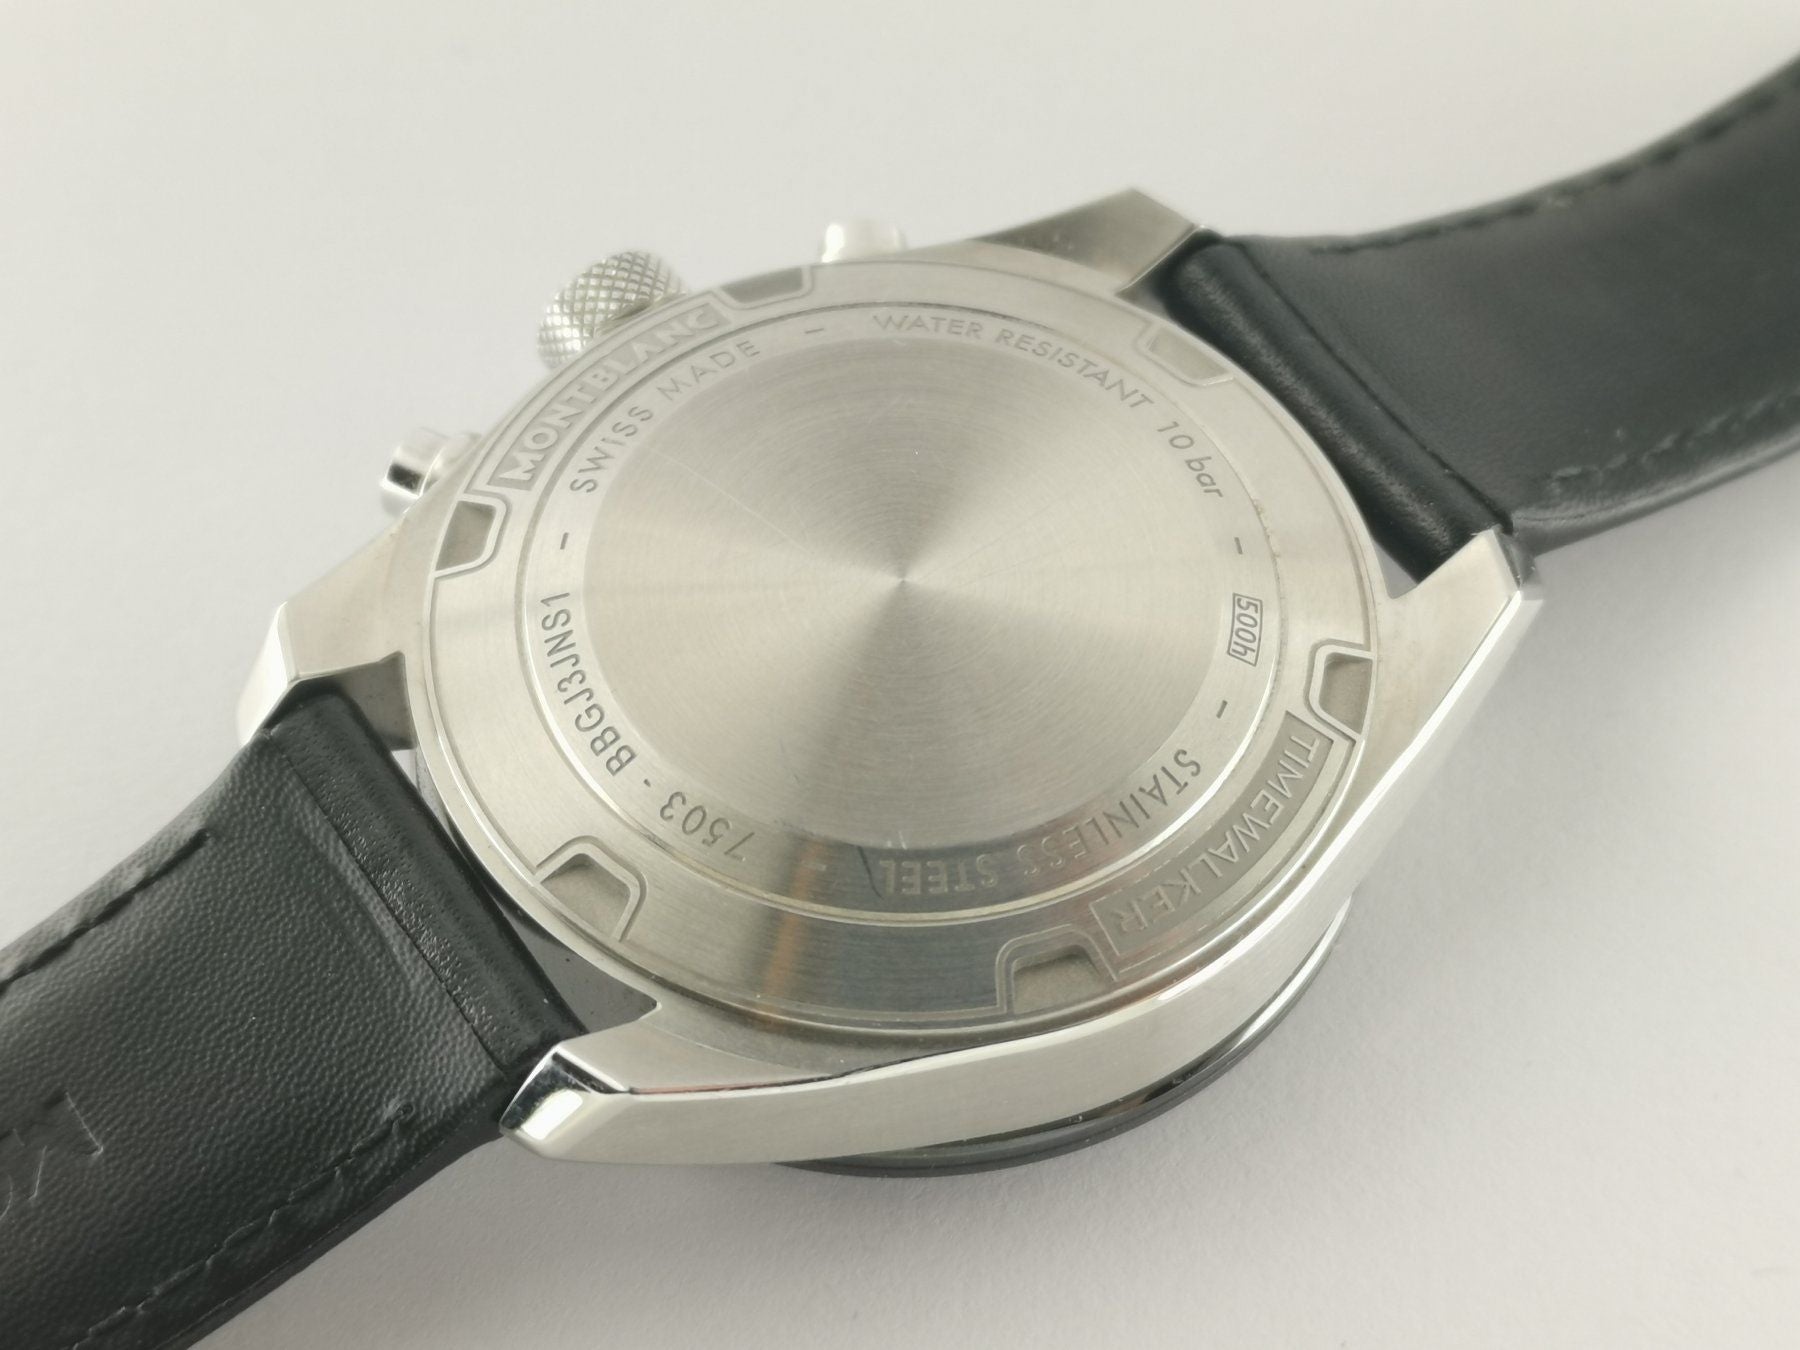 Montblanc TimeWalker automatic chronograph